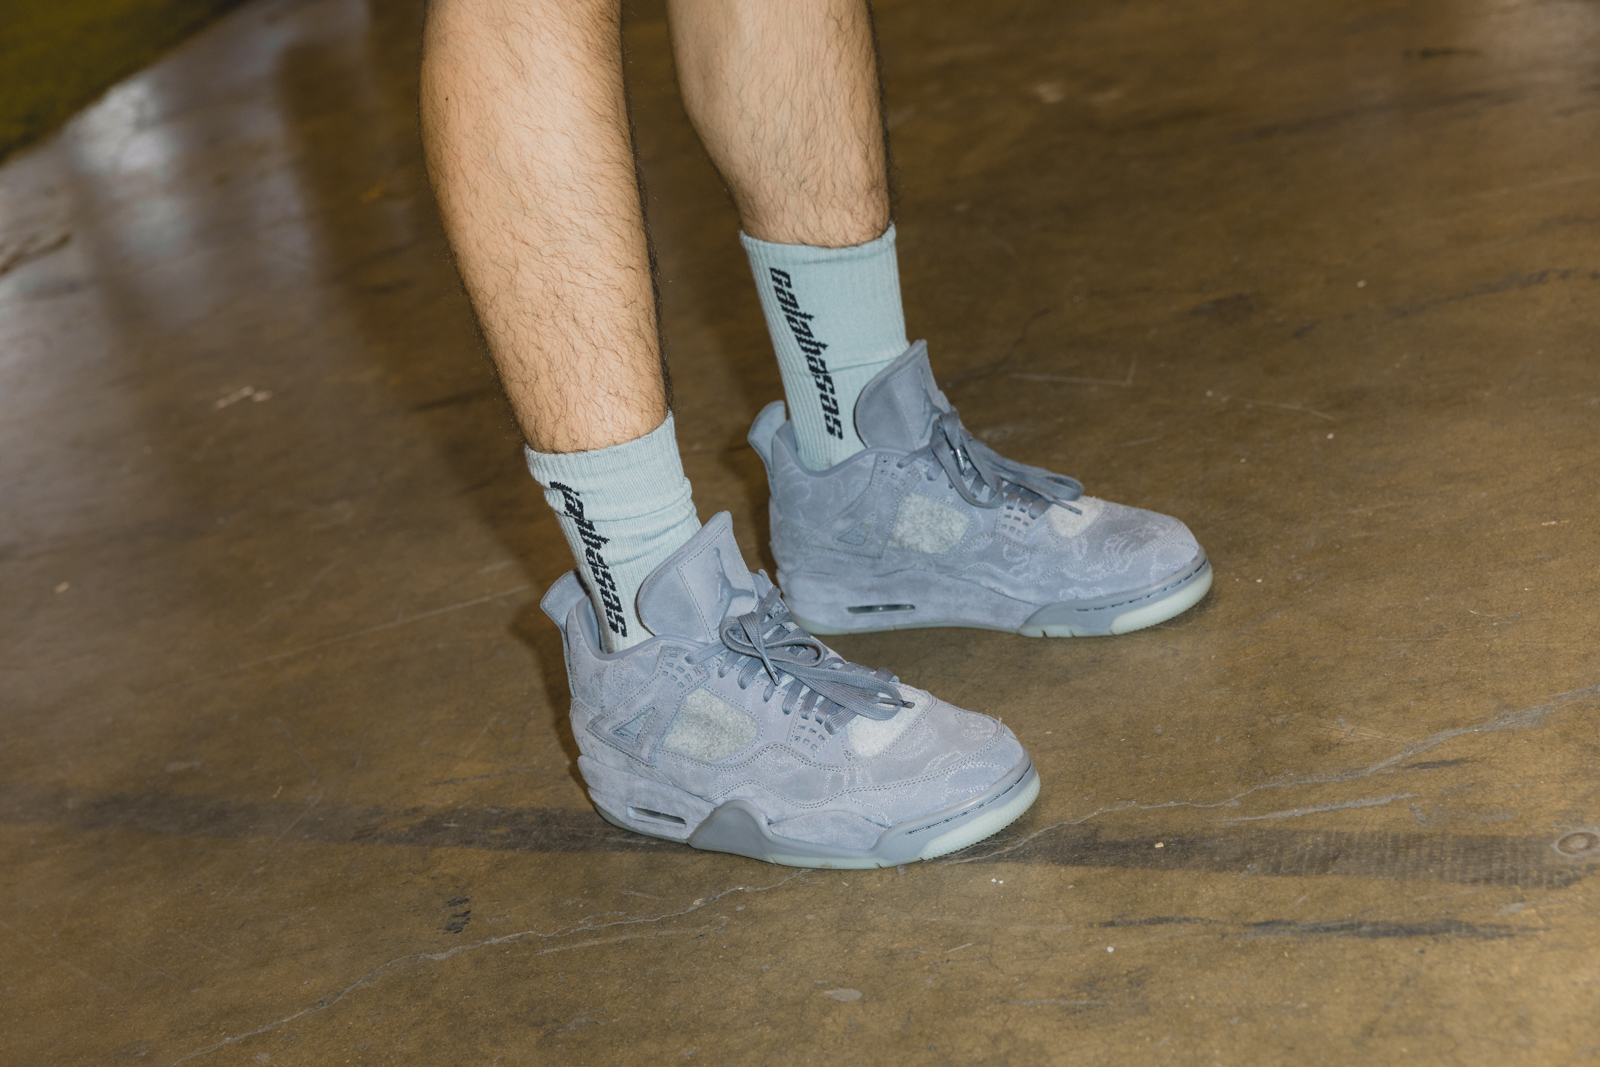 ComplexCon Chicago Sneakers: KAWS x Air Jordan 4